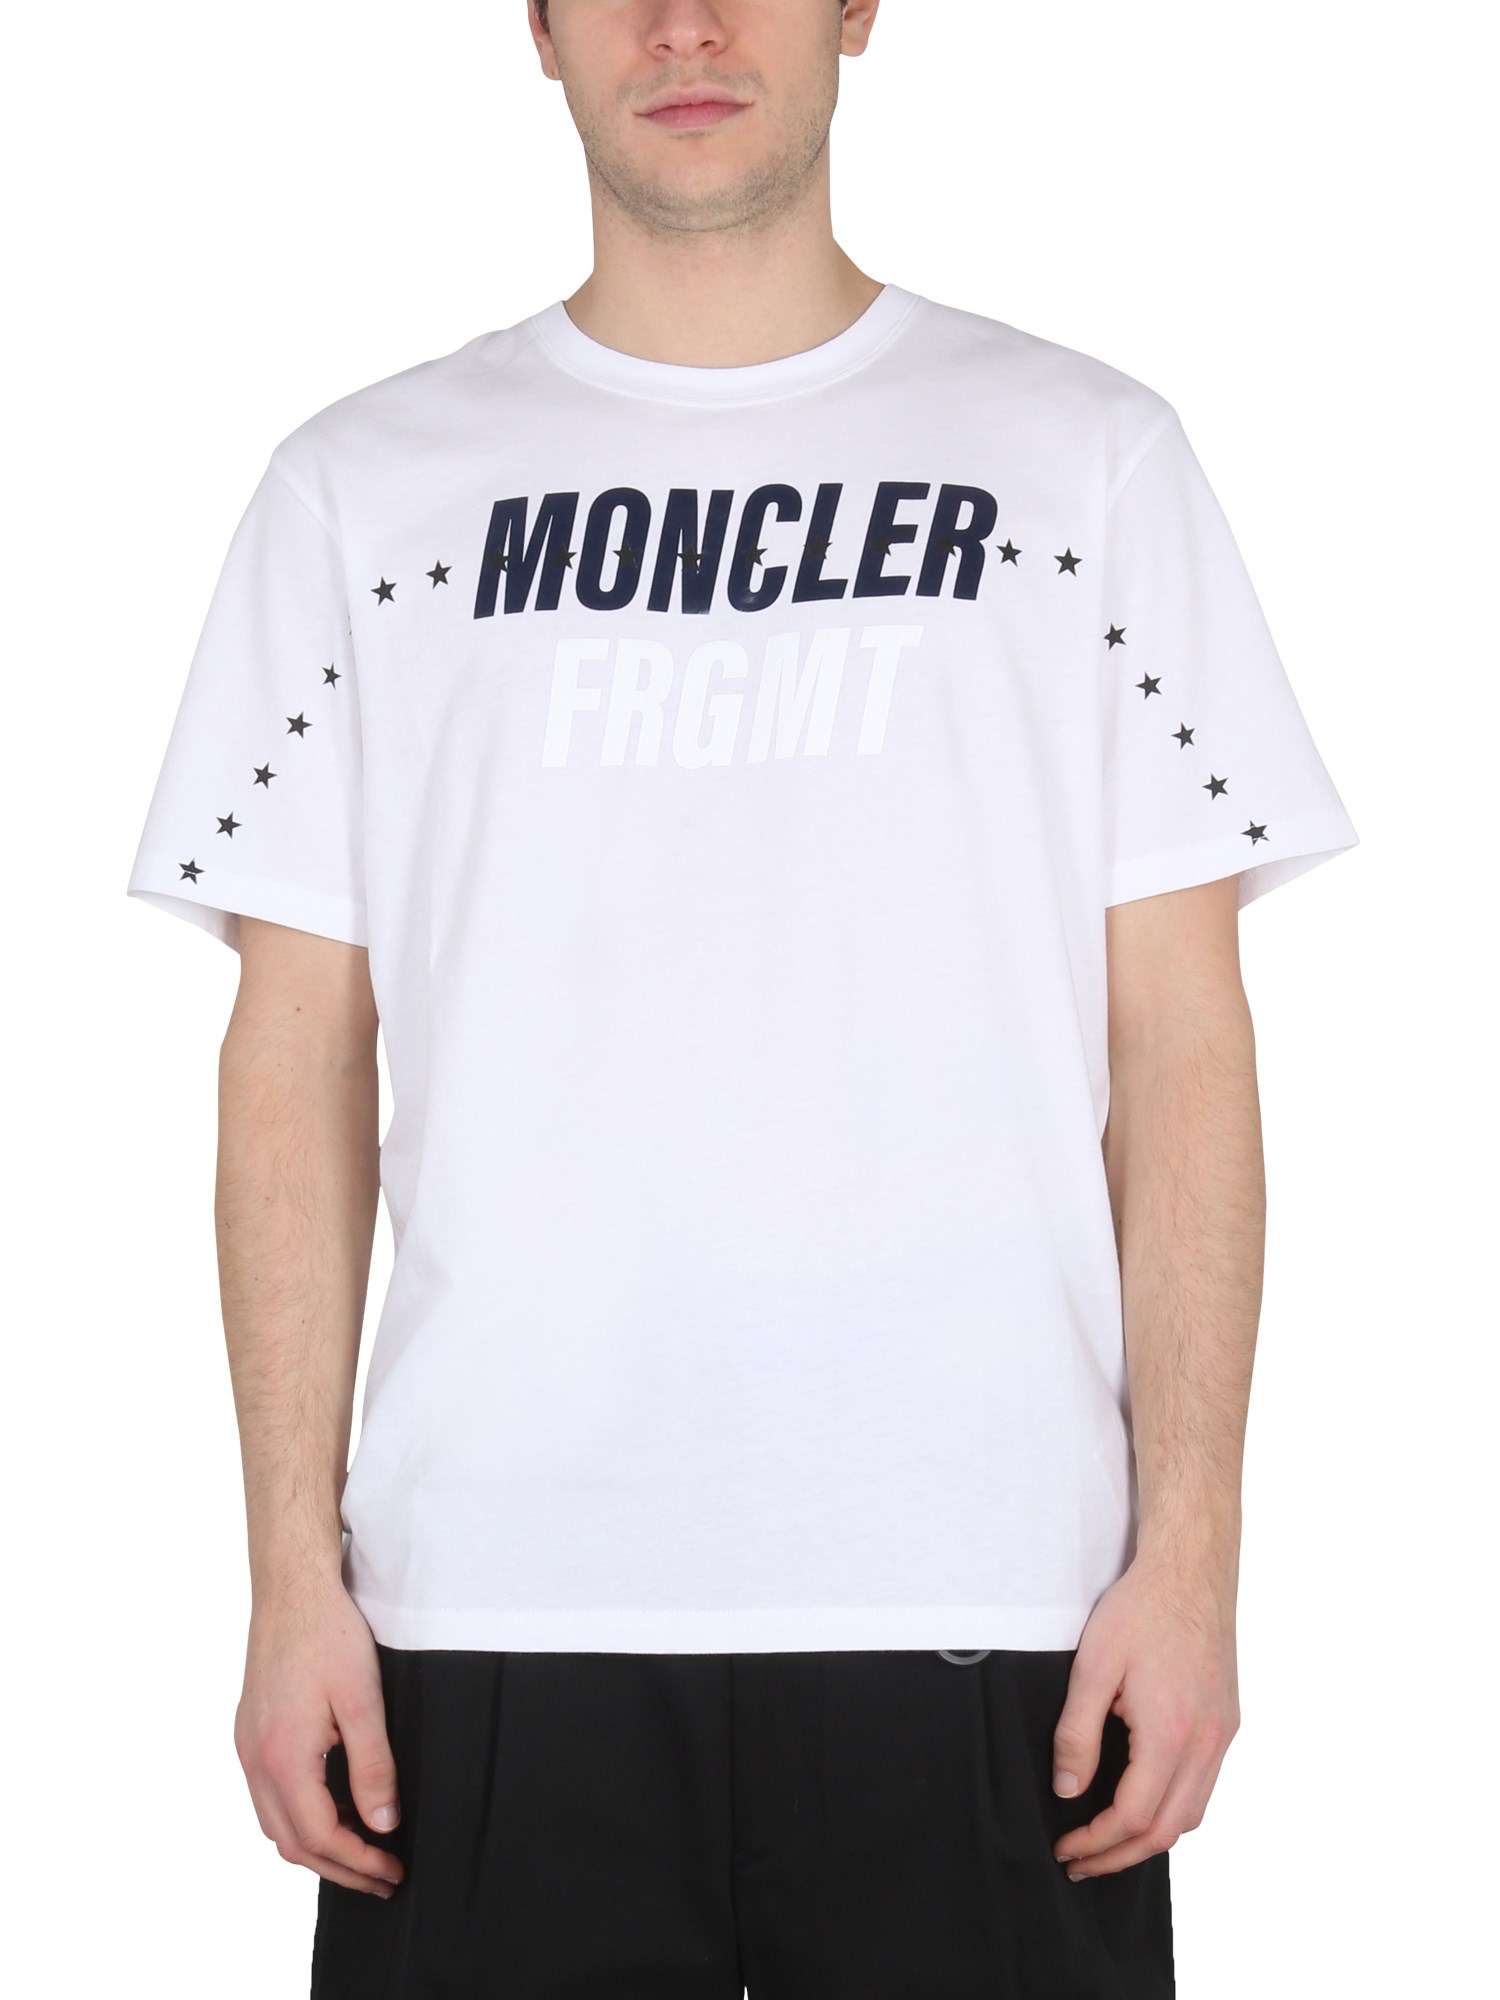 moncler genius t-shirt with logo 7 moncler frgmt hiroshi fujiwara